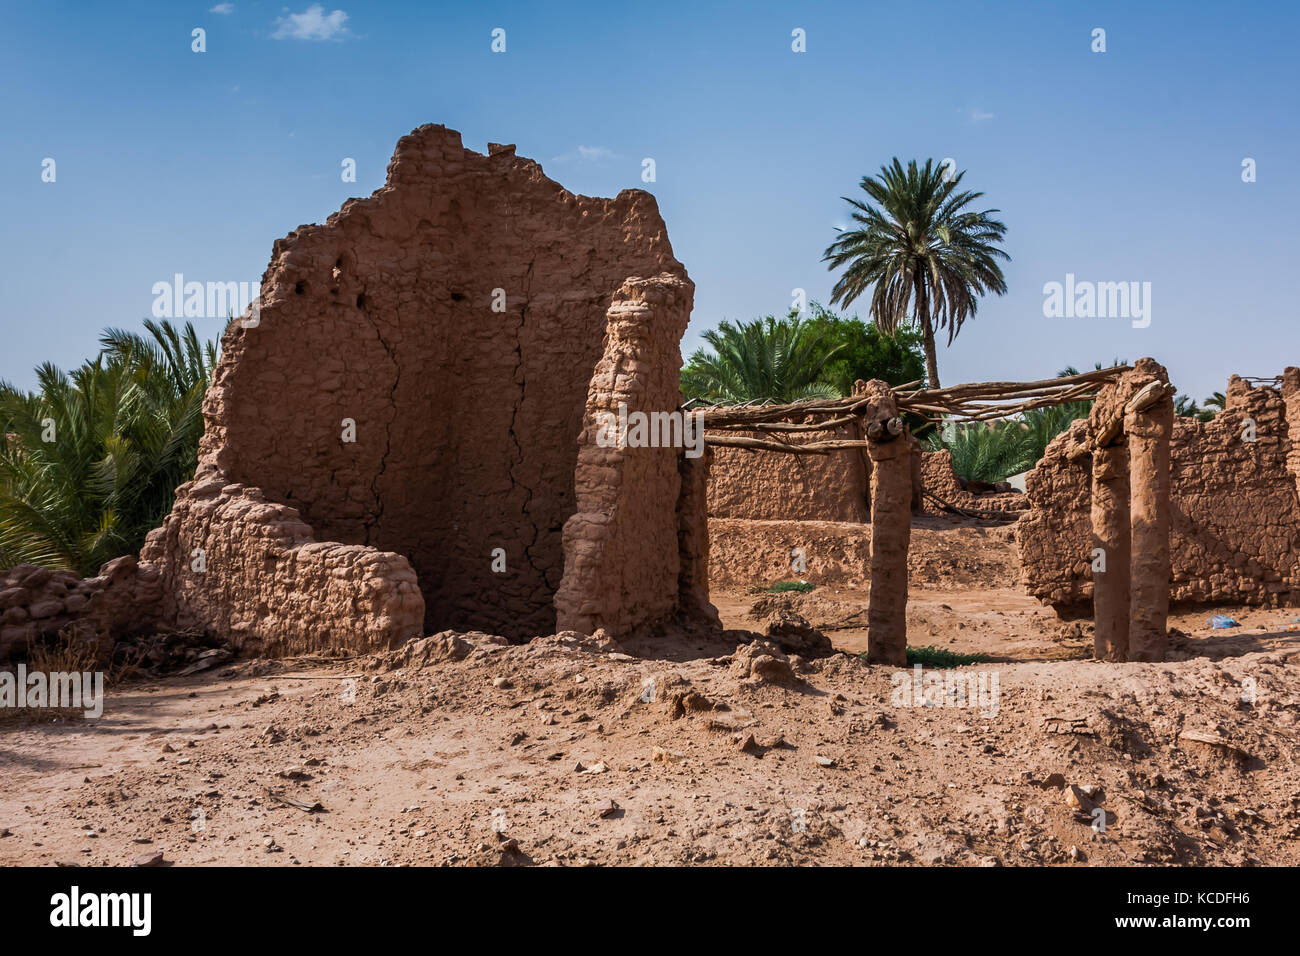 The ruins of the traditional Arab mud house, Riyadh Province, Saudi Arabia Stock Photo